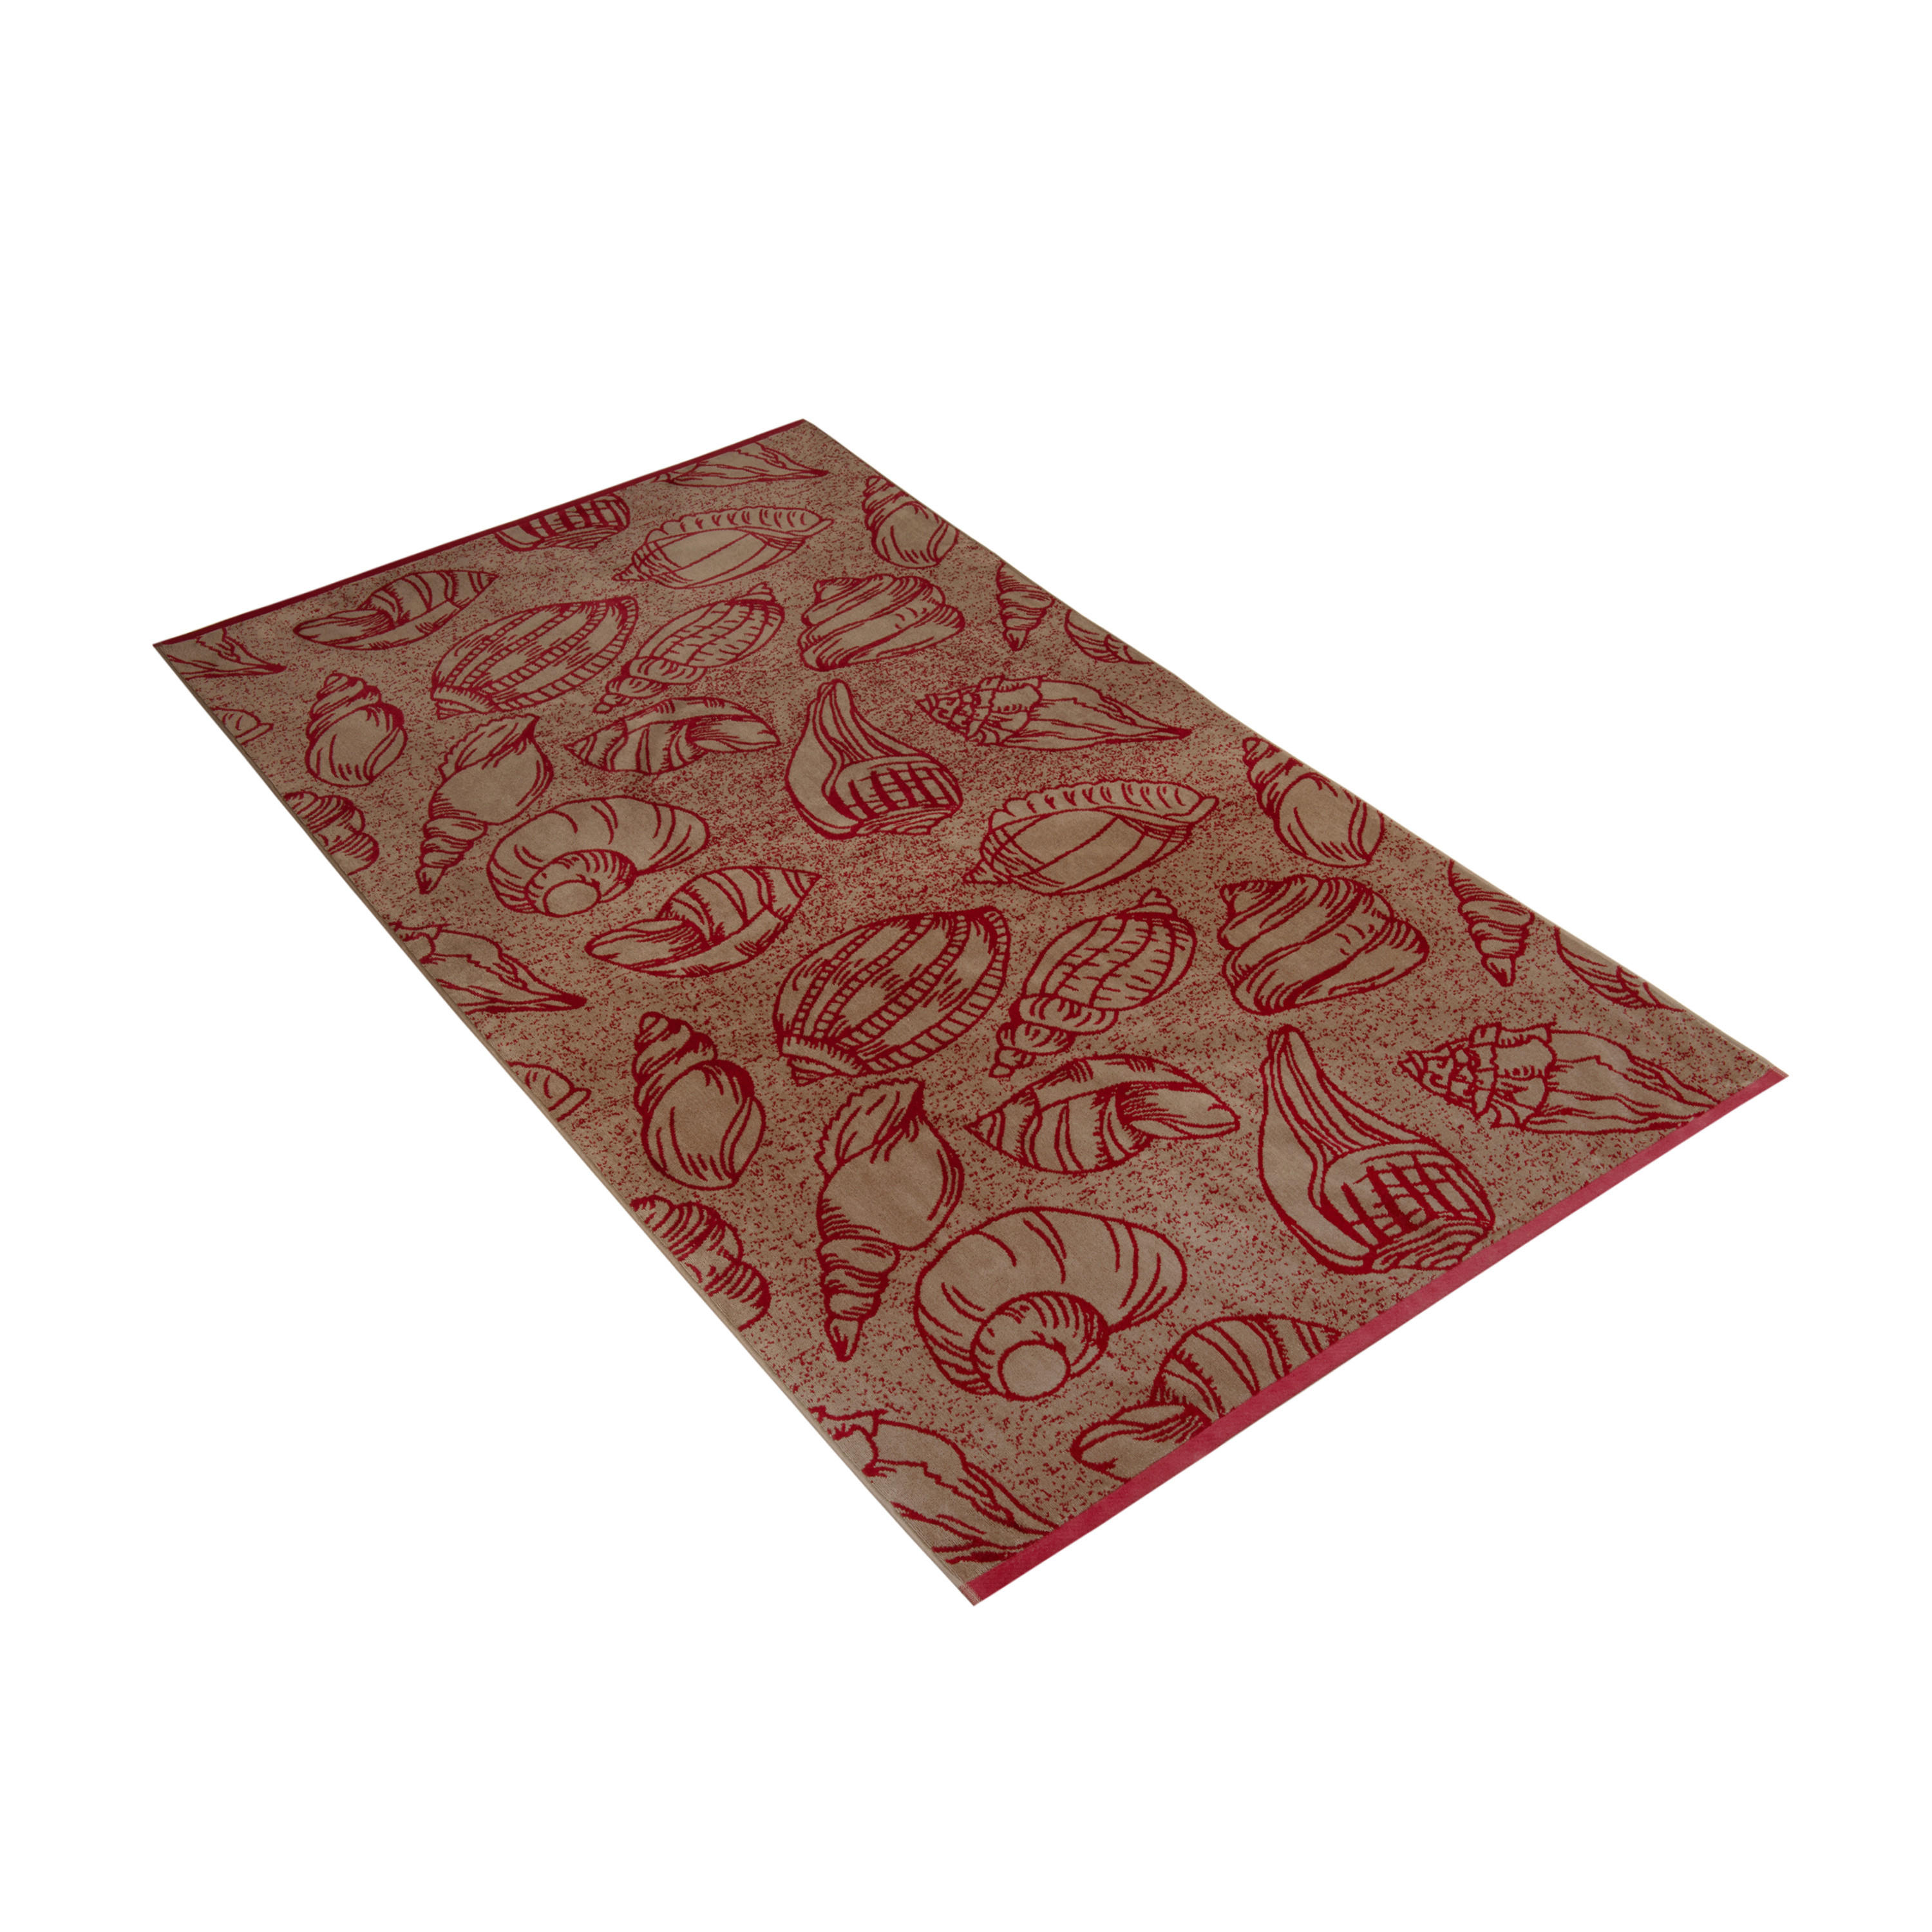 STRANDTUCH Shells  - Rot, KONVENTIONELL, Textil (100/180cm) - Vossen